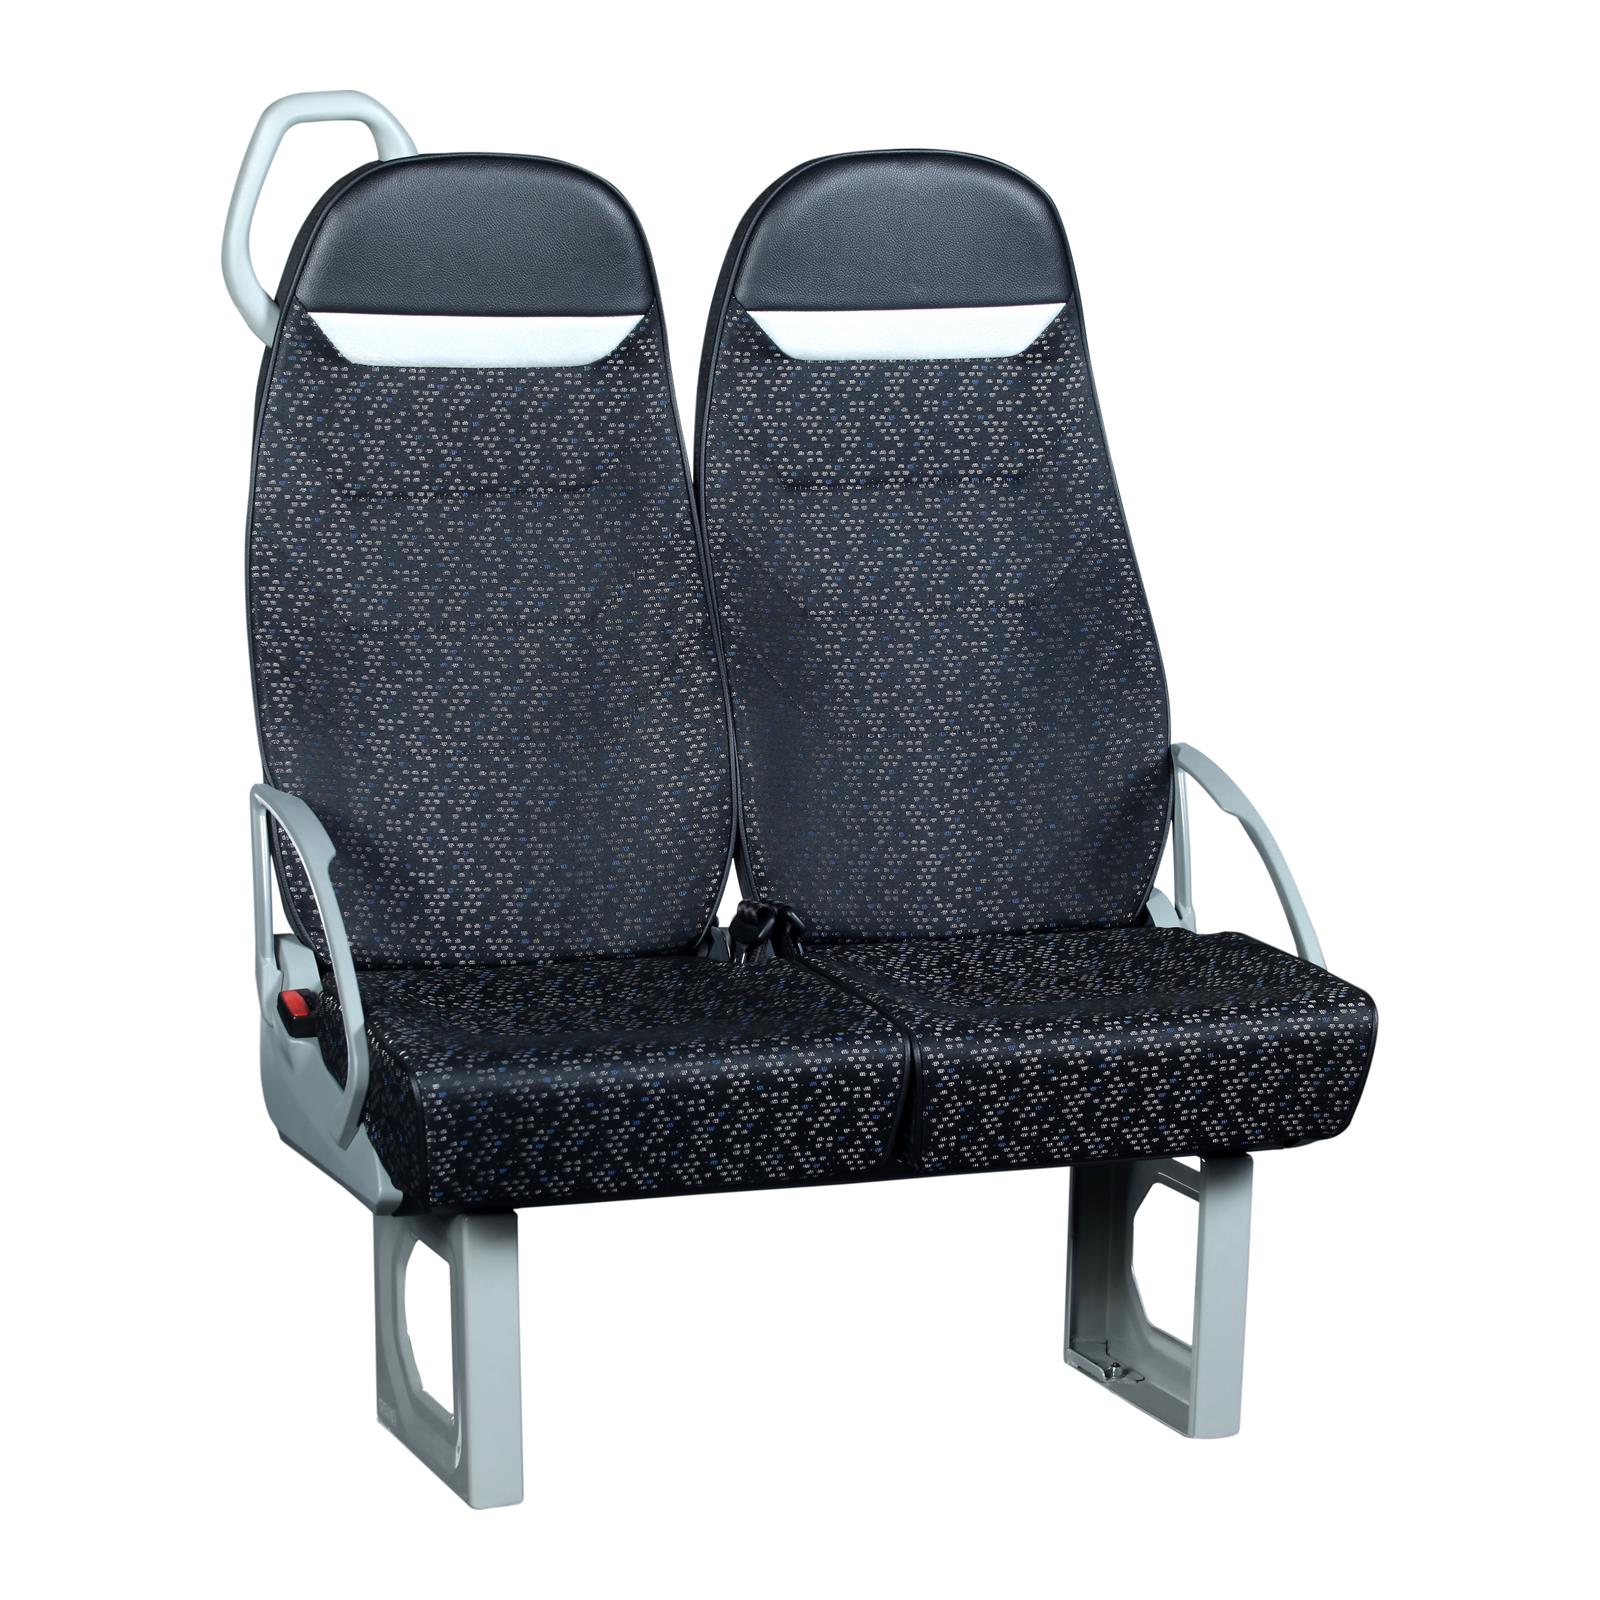 image shows Sege Passenger 3040L Bus Seat